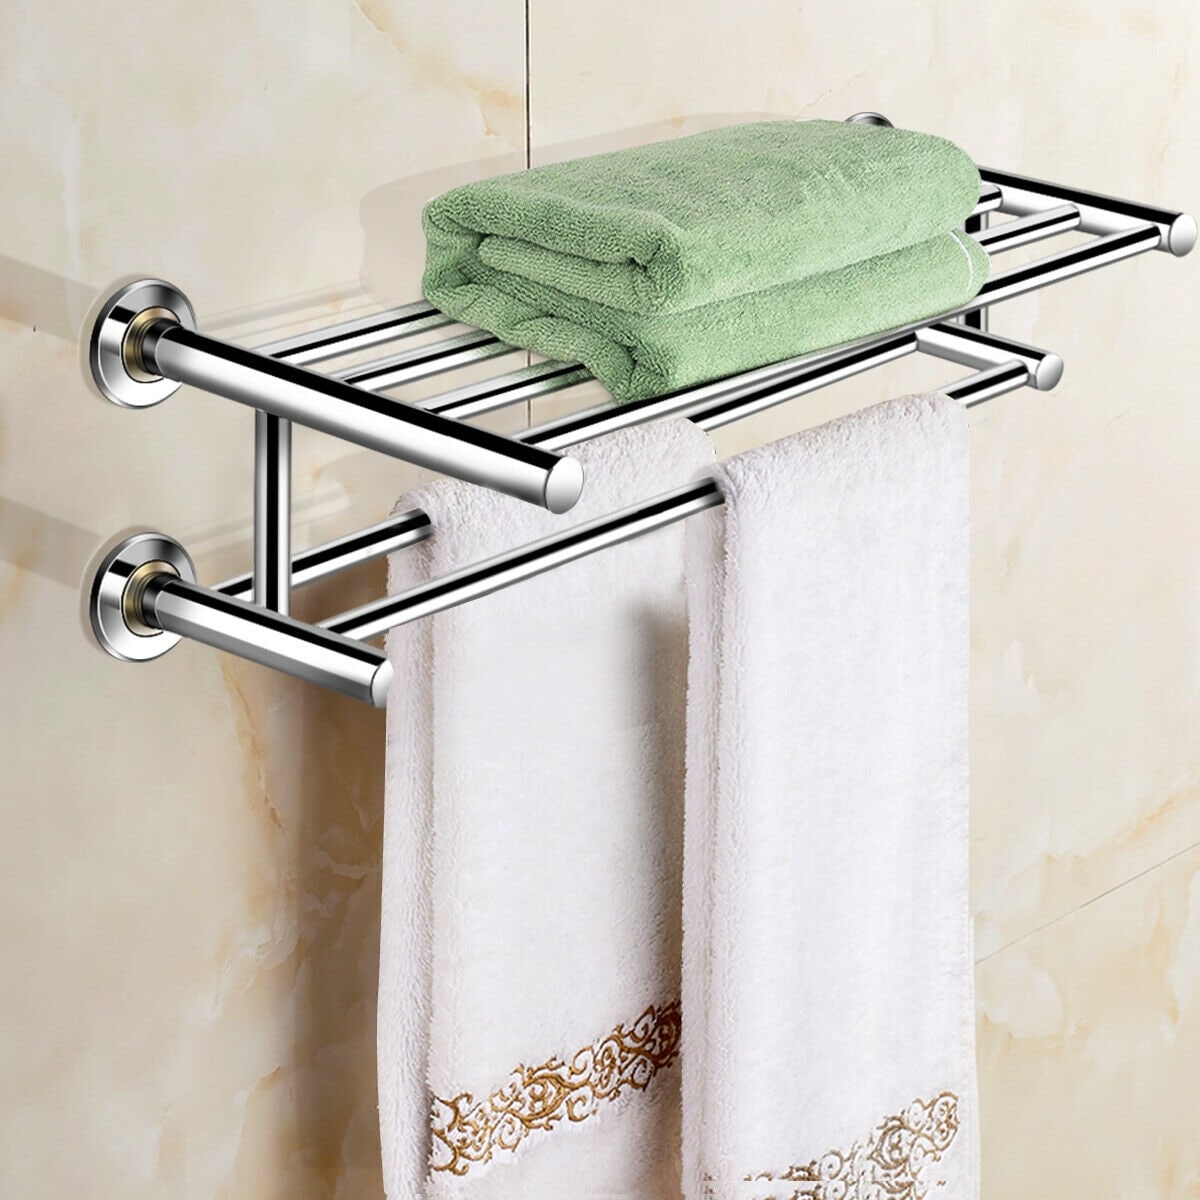 https://ak1.ostkcdn.com/images/products/is/images/direct/8f7a4c11e9832fb7b489b0386b7afc6068589a8f/Costway-Wall-Mounted-Towel-Rack-Bathroom-Hotel-Rail-Holder-Storage-Shelf-Stainless-Steel.jpg